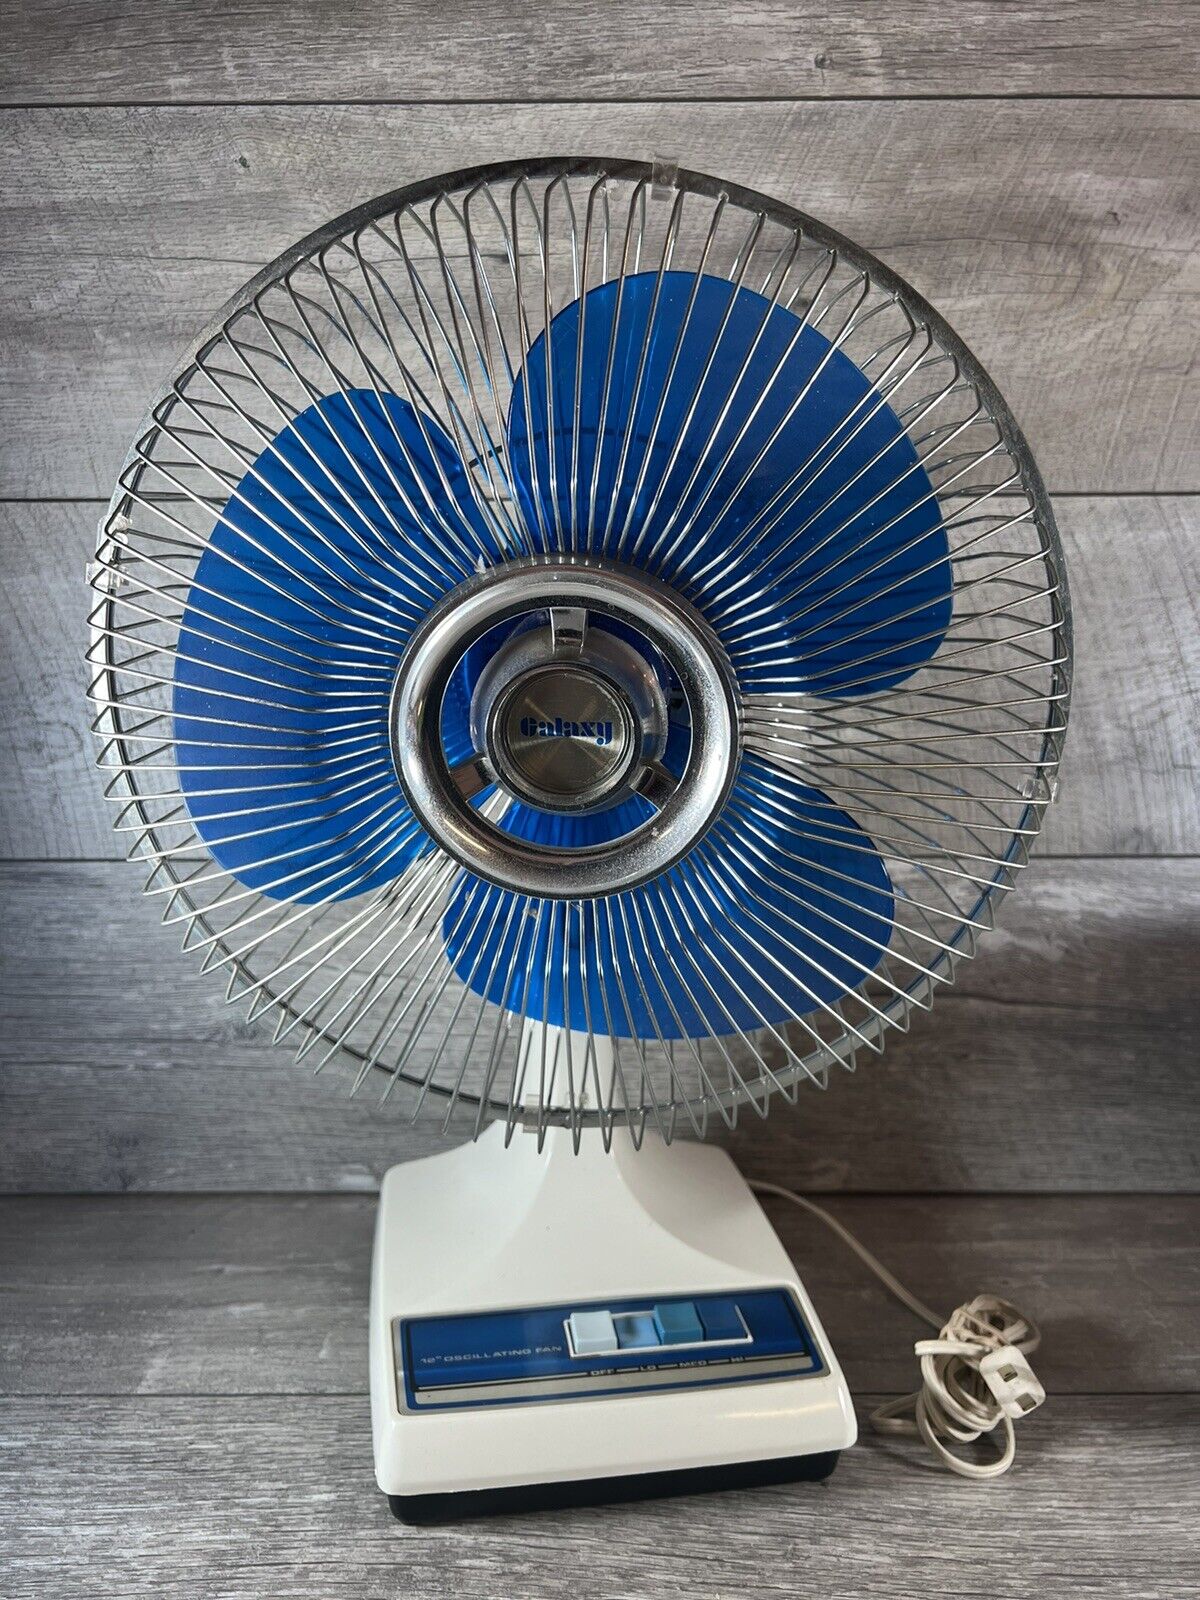 Vintage Galaxy 12” Oscillating Fan Translucent Blue Blade Type 12-1 Lasko Quiet